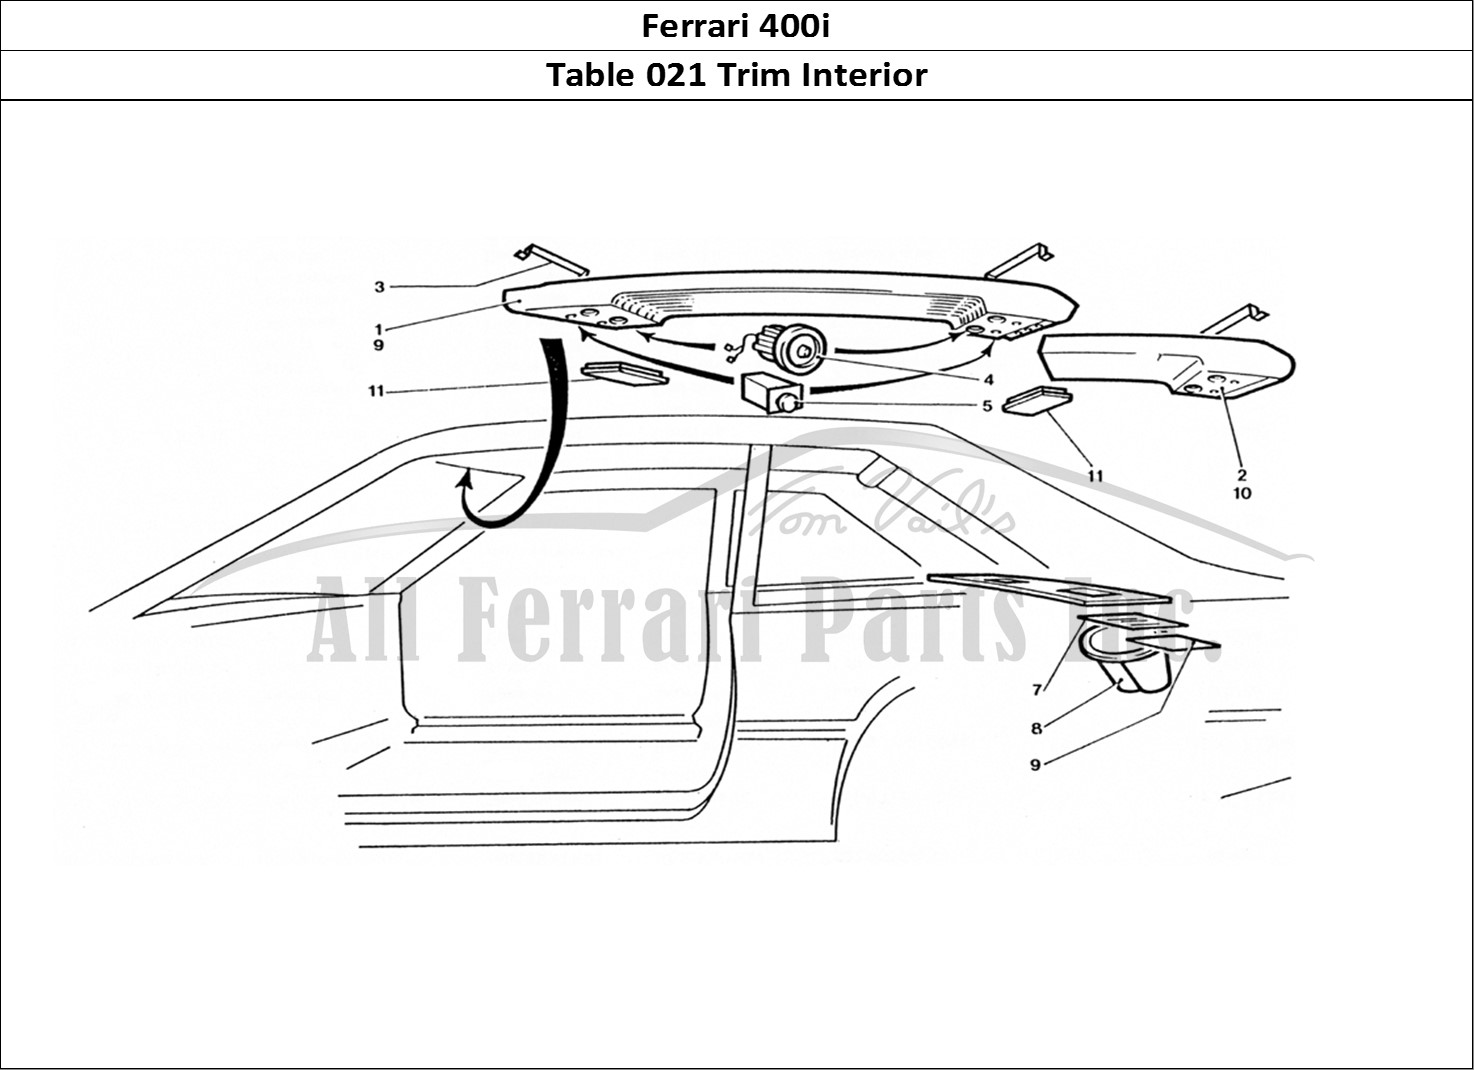 Ferrari Parts Ferrari 400 GT (Coachwork) Page 021 Roof panel & Switches